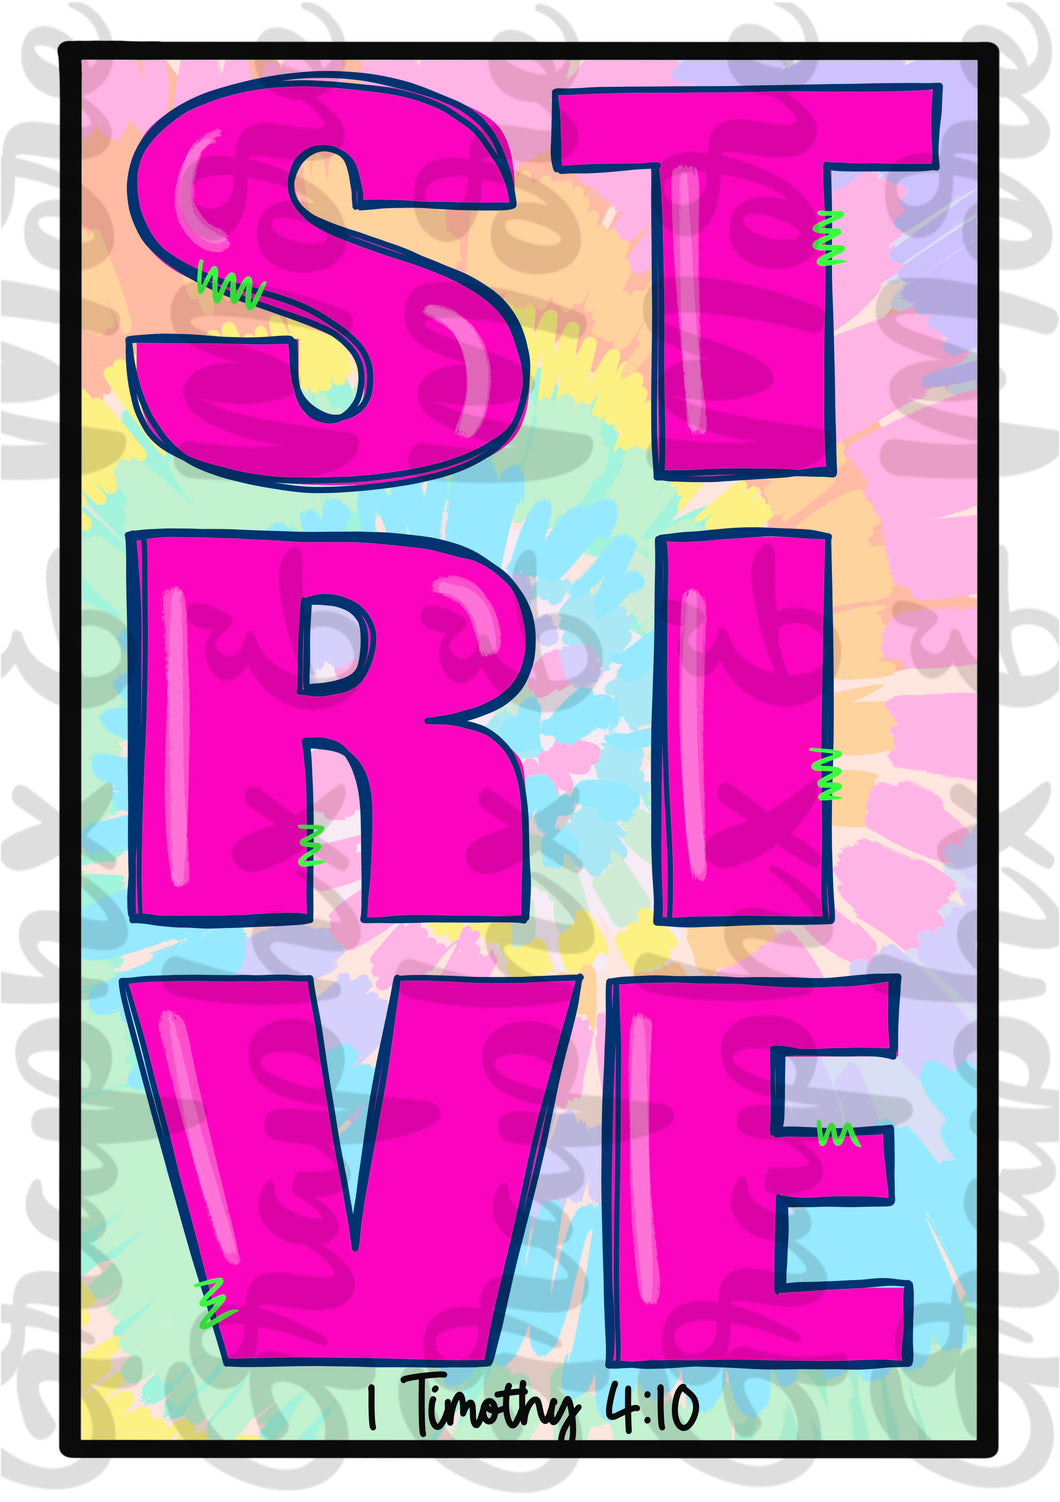 Strive Block PNG | 1 Timothy 4:10 | Sublimation Design | Hand Drawn